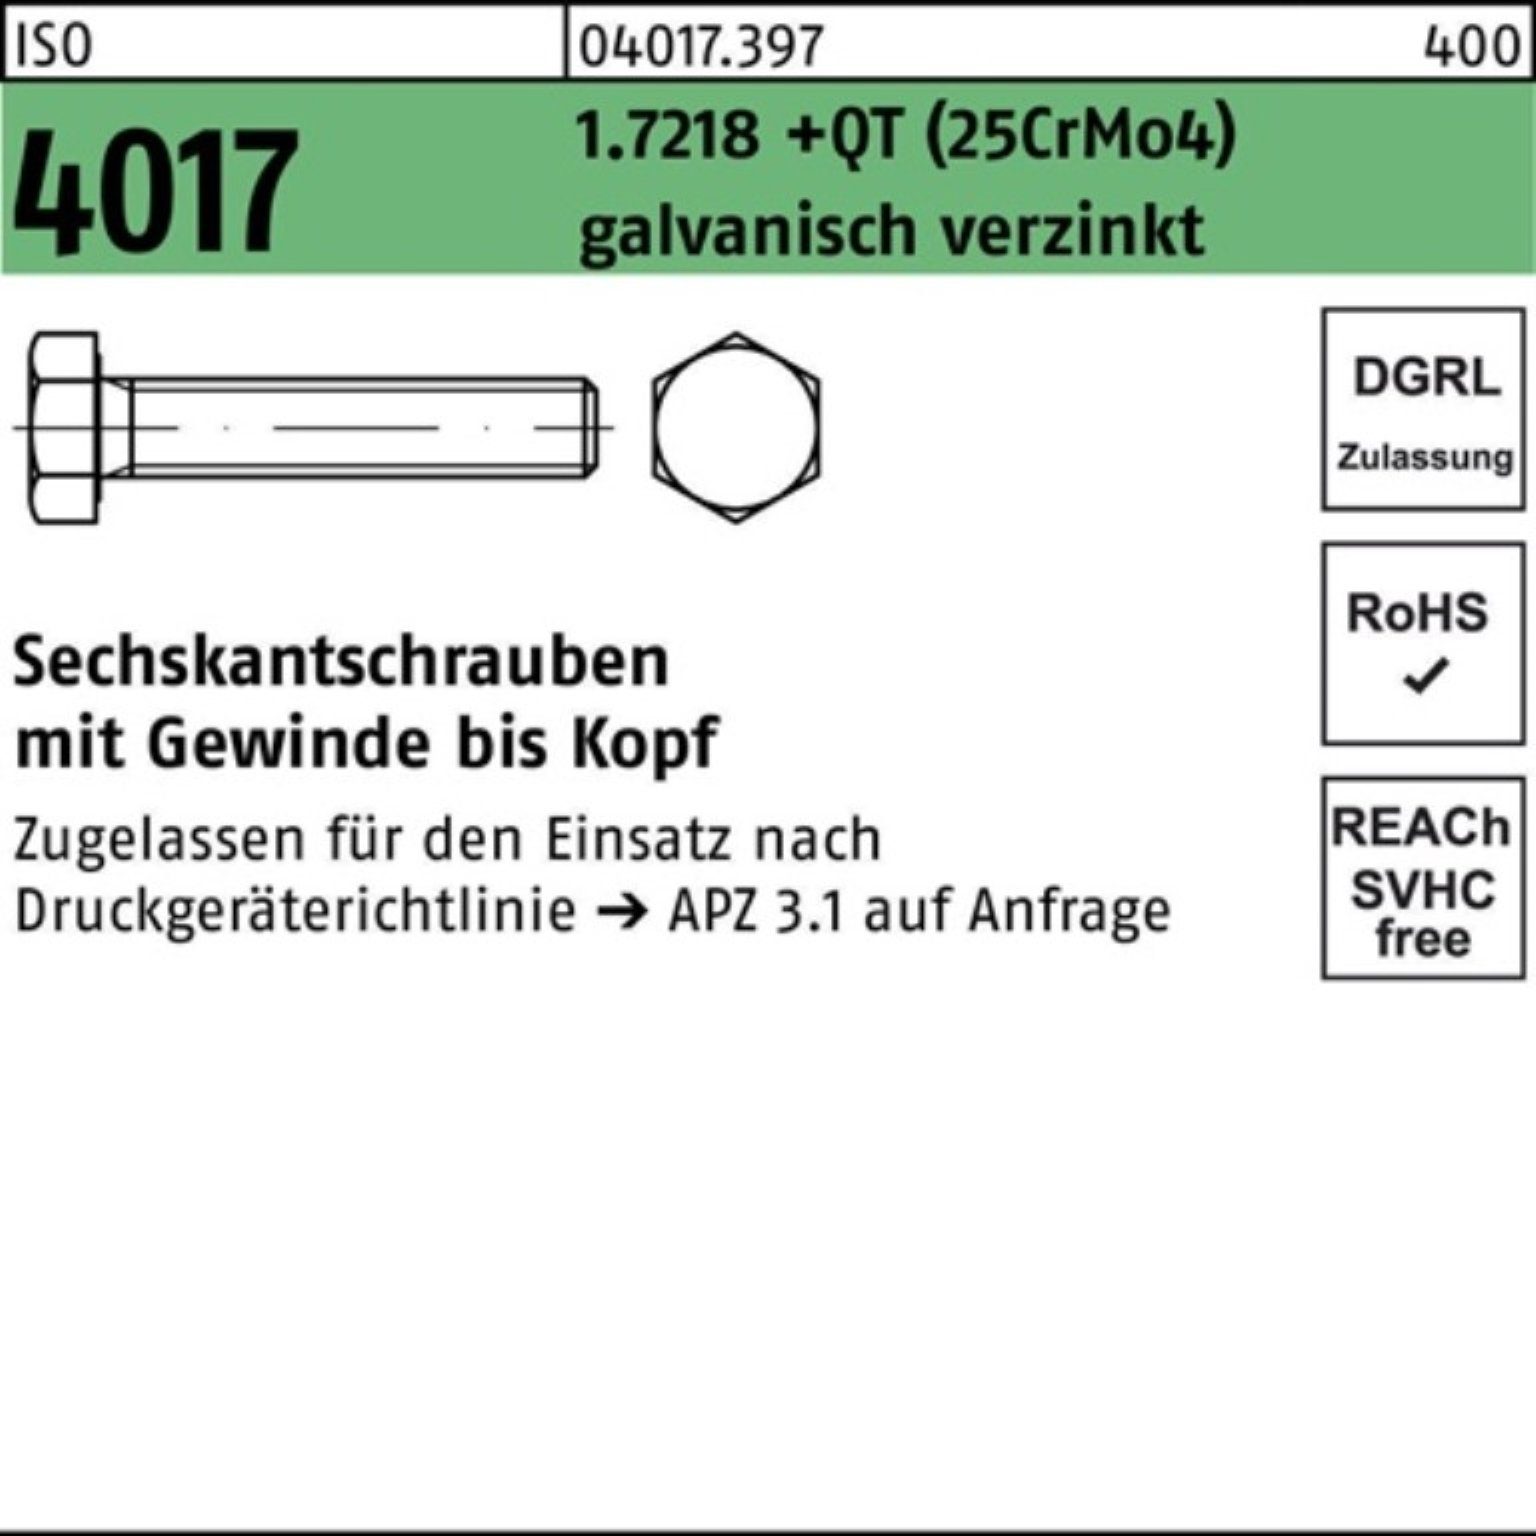 VG (25CrMo4) Bufab M30x60 4017 Sechskantschraube g Sechskantschraube 1.7218 100er +QT Pack ISO